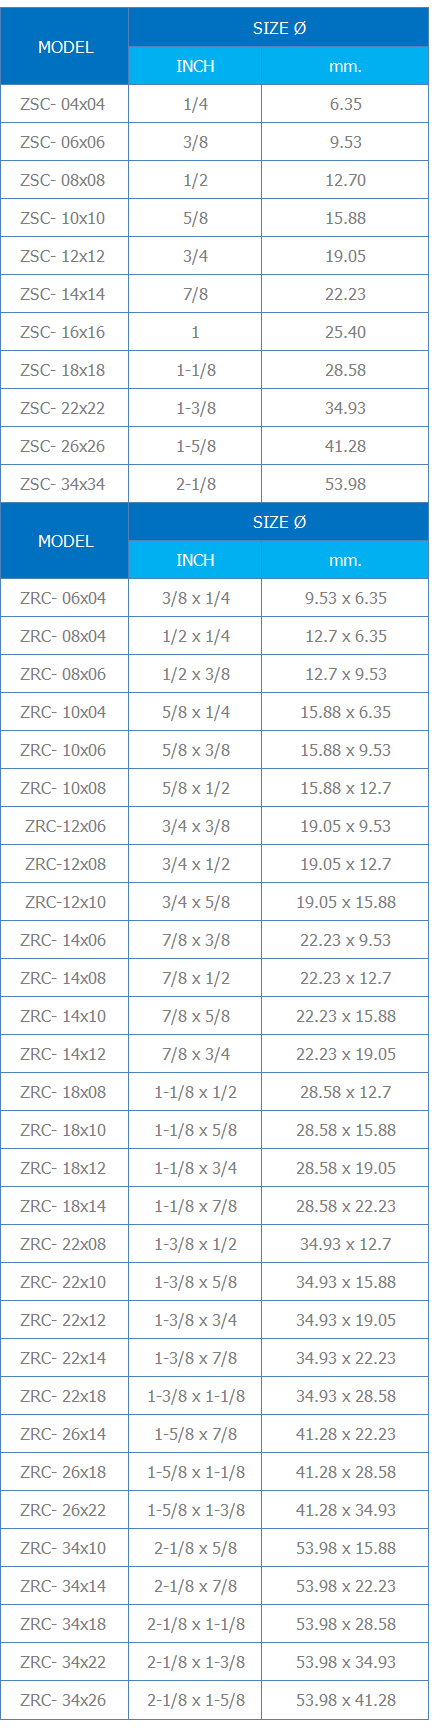 ZSC- 04x04,ZSC- 06x06,ZSC- 08x08,ZSC- 10x10,ZSC- 12x12,ZSC- 14x14,ZSC- 16x16, ZSC- 18x18,ZSC- 22x22,ZSC- 26x26,ZSC- 34x34,ZRC- 06x04,ZRC- 08x04,ZRC- 08x06, ZRC- 10x04,ZRC- 10x06,ZRC- 10x08,ZRC-12x06,ZRC-12x08,ZRC-12x10,ZRC- 14x06, ZRC- 14x08,ZRC- 14x10,ZRC- 14x12,ZRC- 18x08,ZRC- 18x10,ZRC- 18x12,ZRC- 18x14, ZRC- 22x08,ZRC- 22x10,ZRC- 22x12,ZRC- 22x14,ZRC- 22x18,ZRC- 26x14,ZRC- 26x18, ZRC- 26x22,ZRC- 34x10,ZRC- 34x14,ZRC- 34x18,ZRC- 34x22,ZRC- 34x26